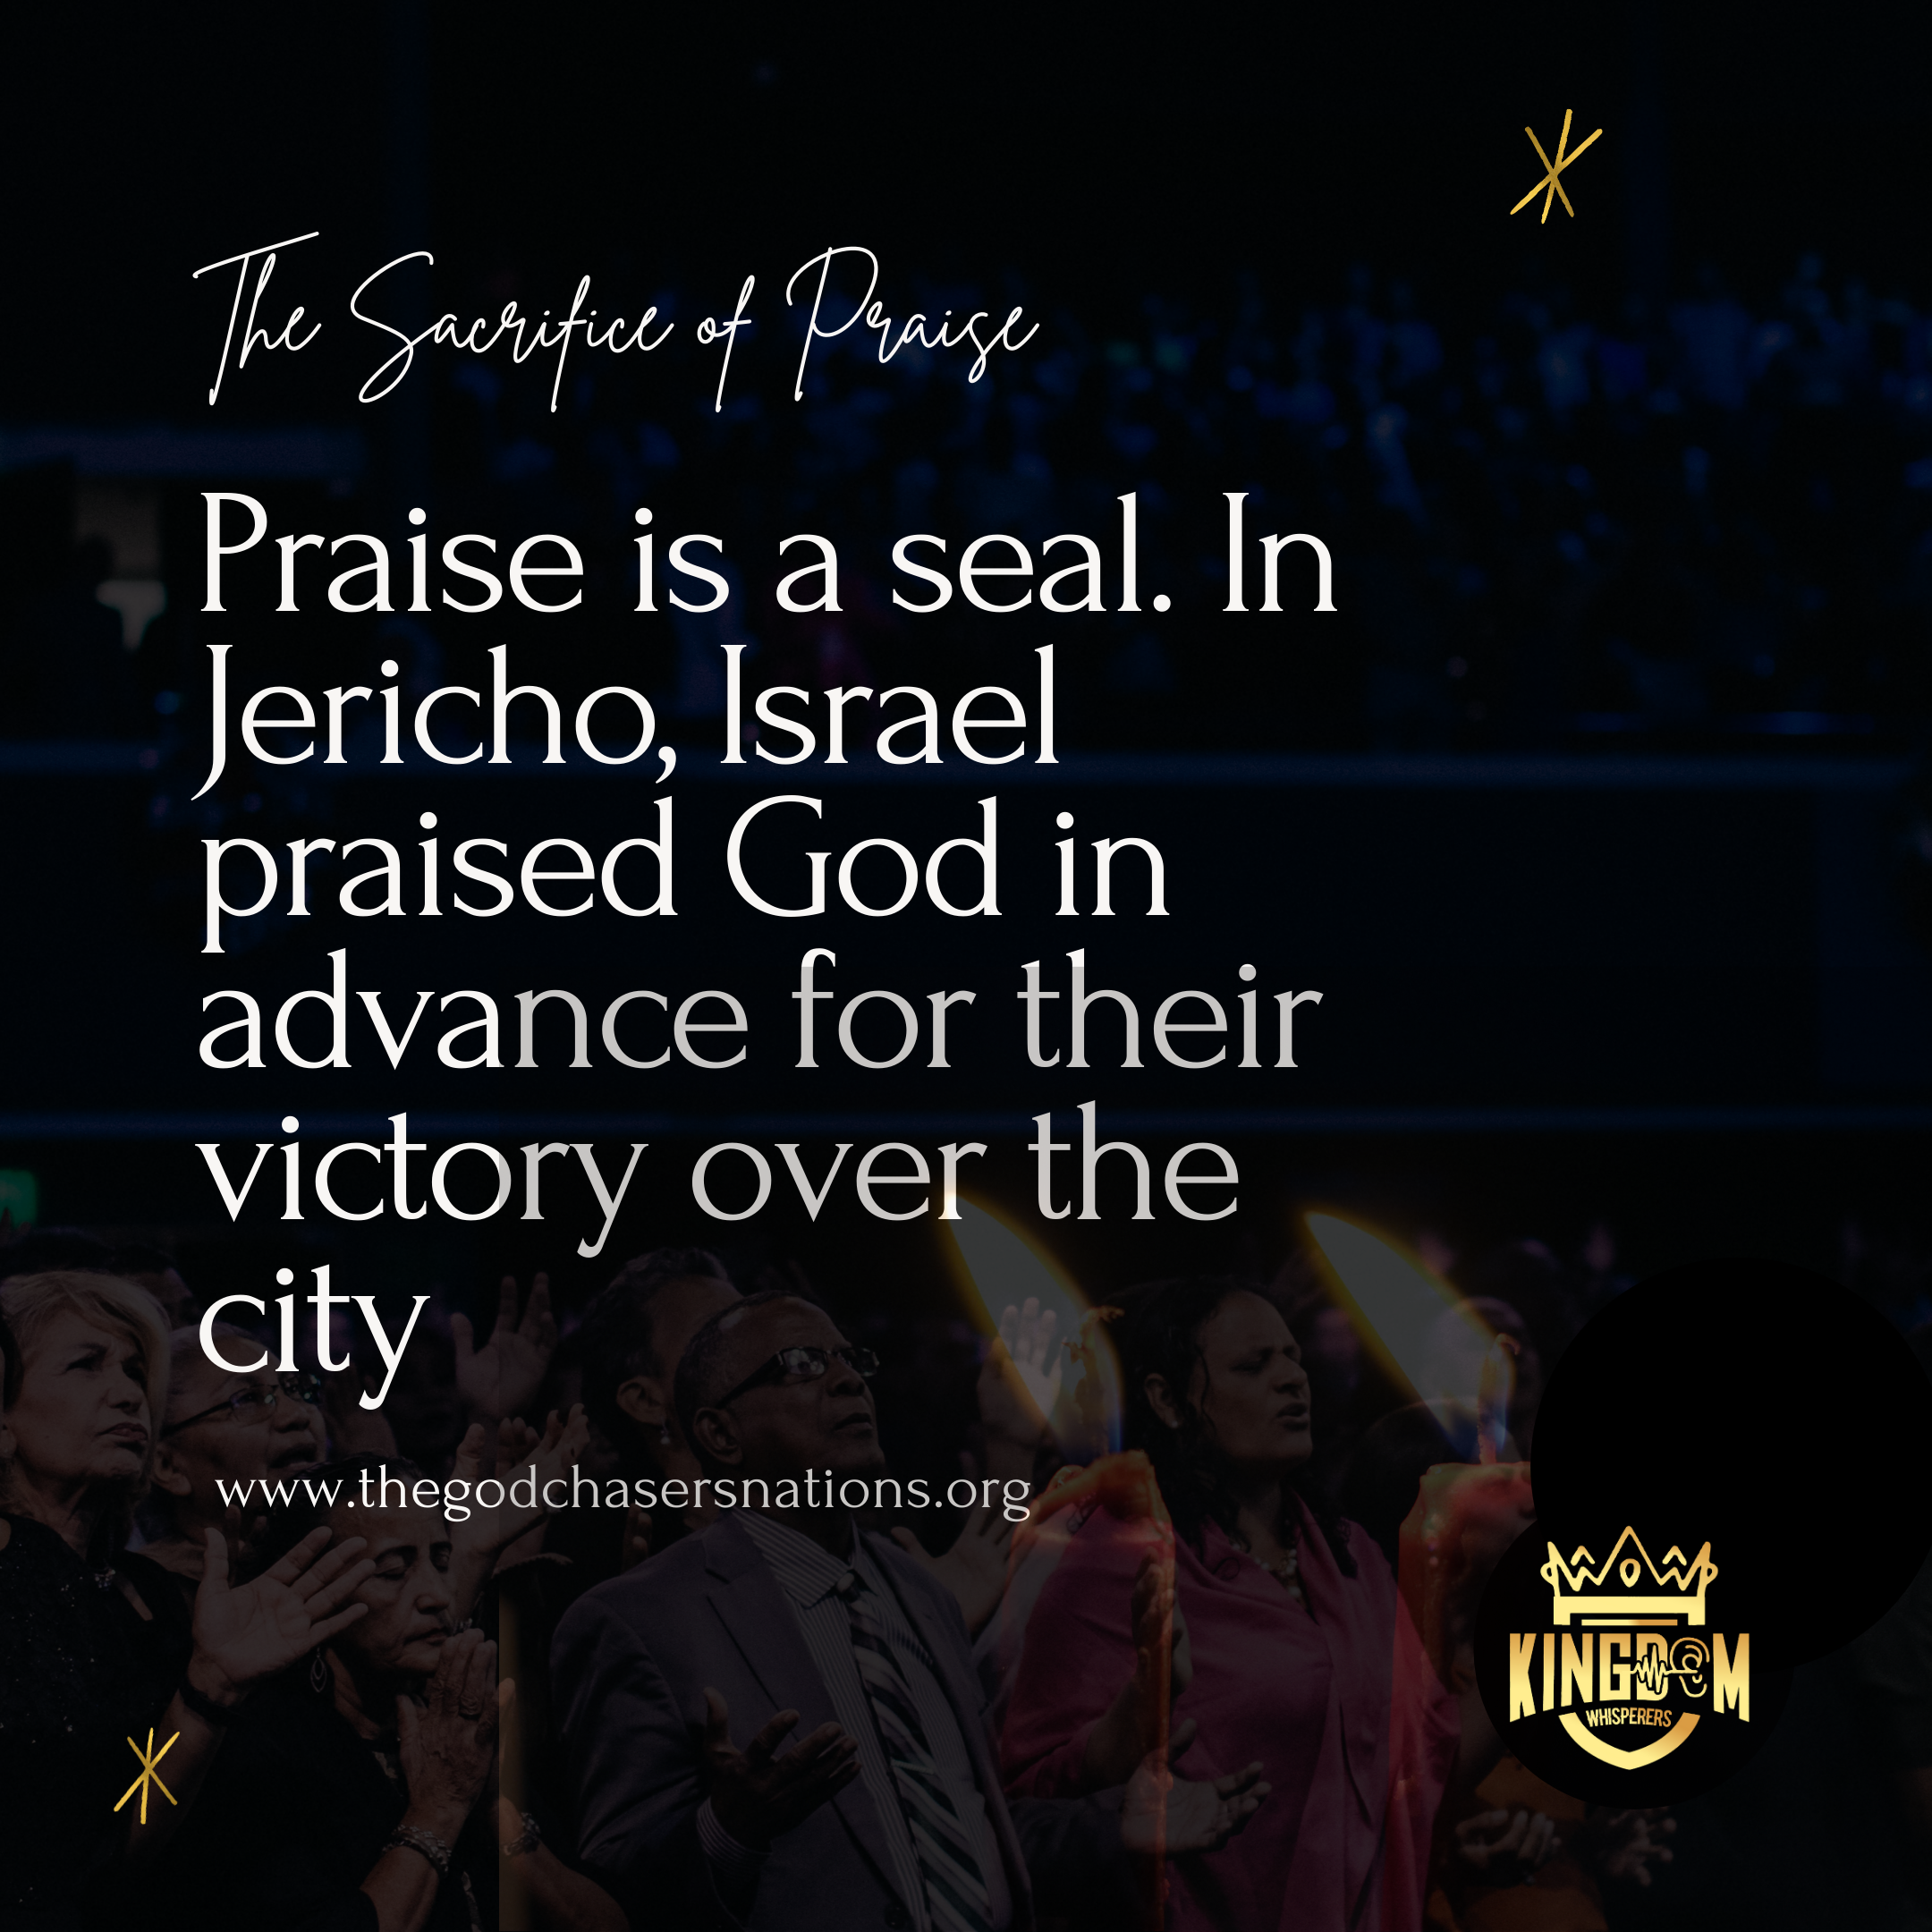 The sacrifice of praise